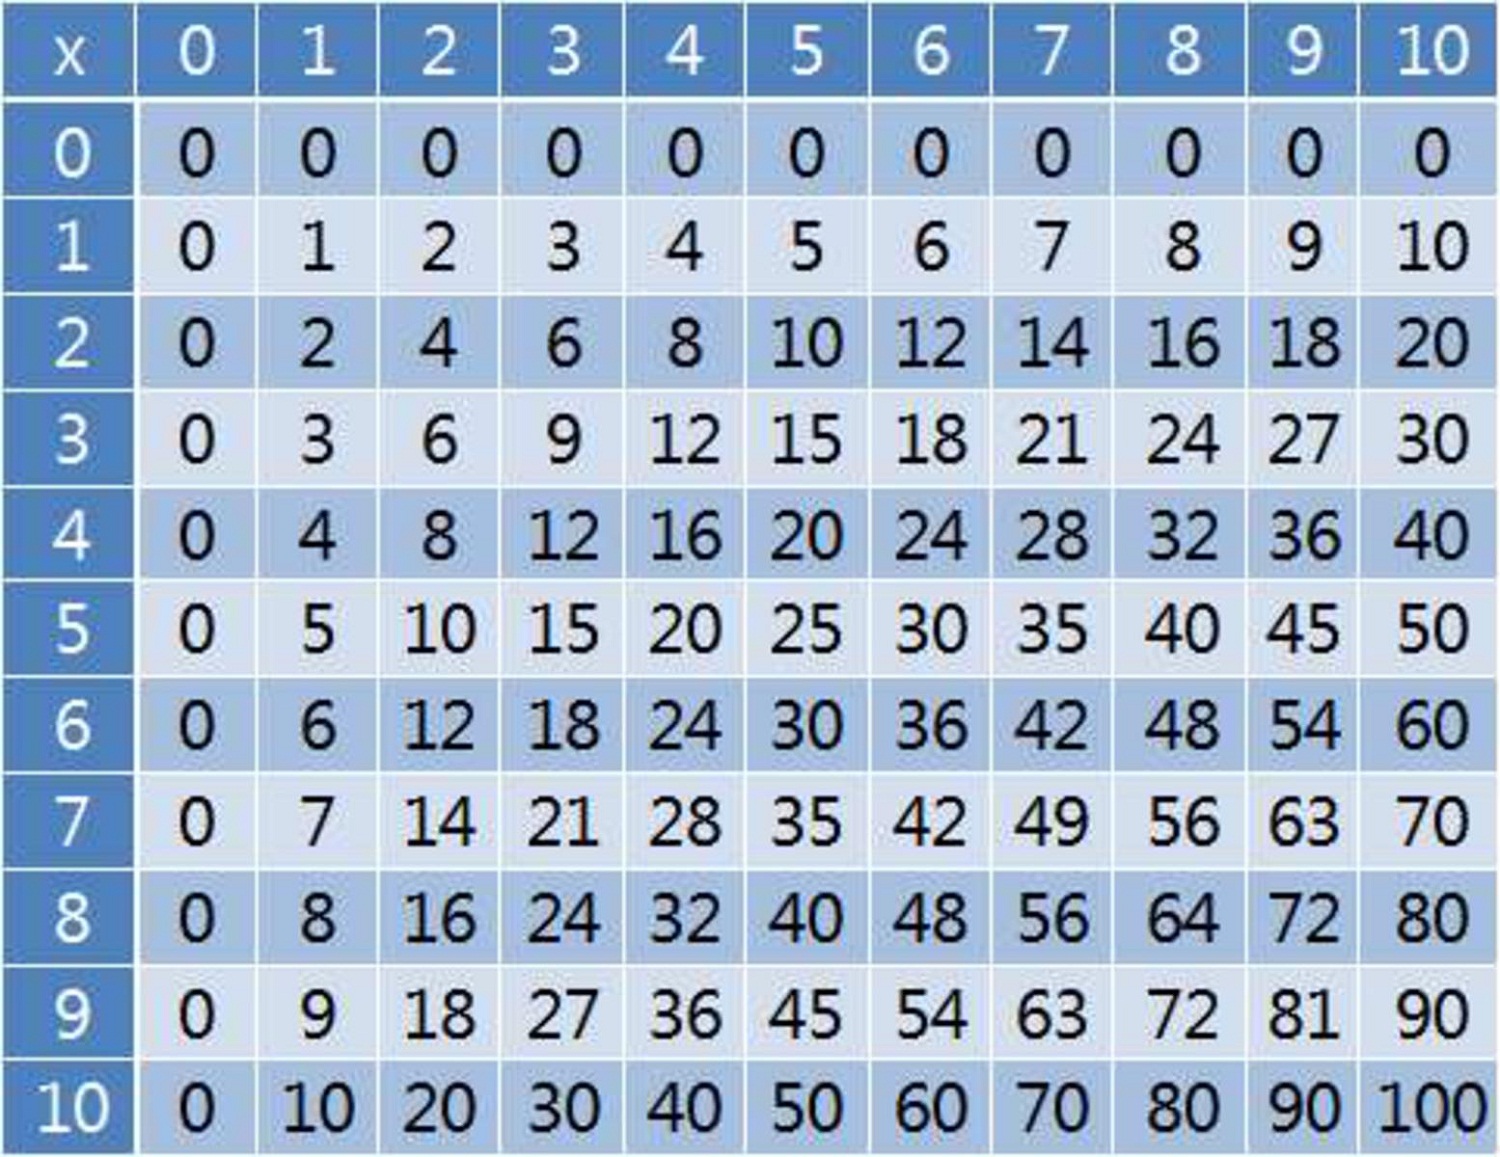 large multiplication table 1-10